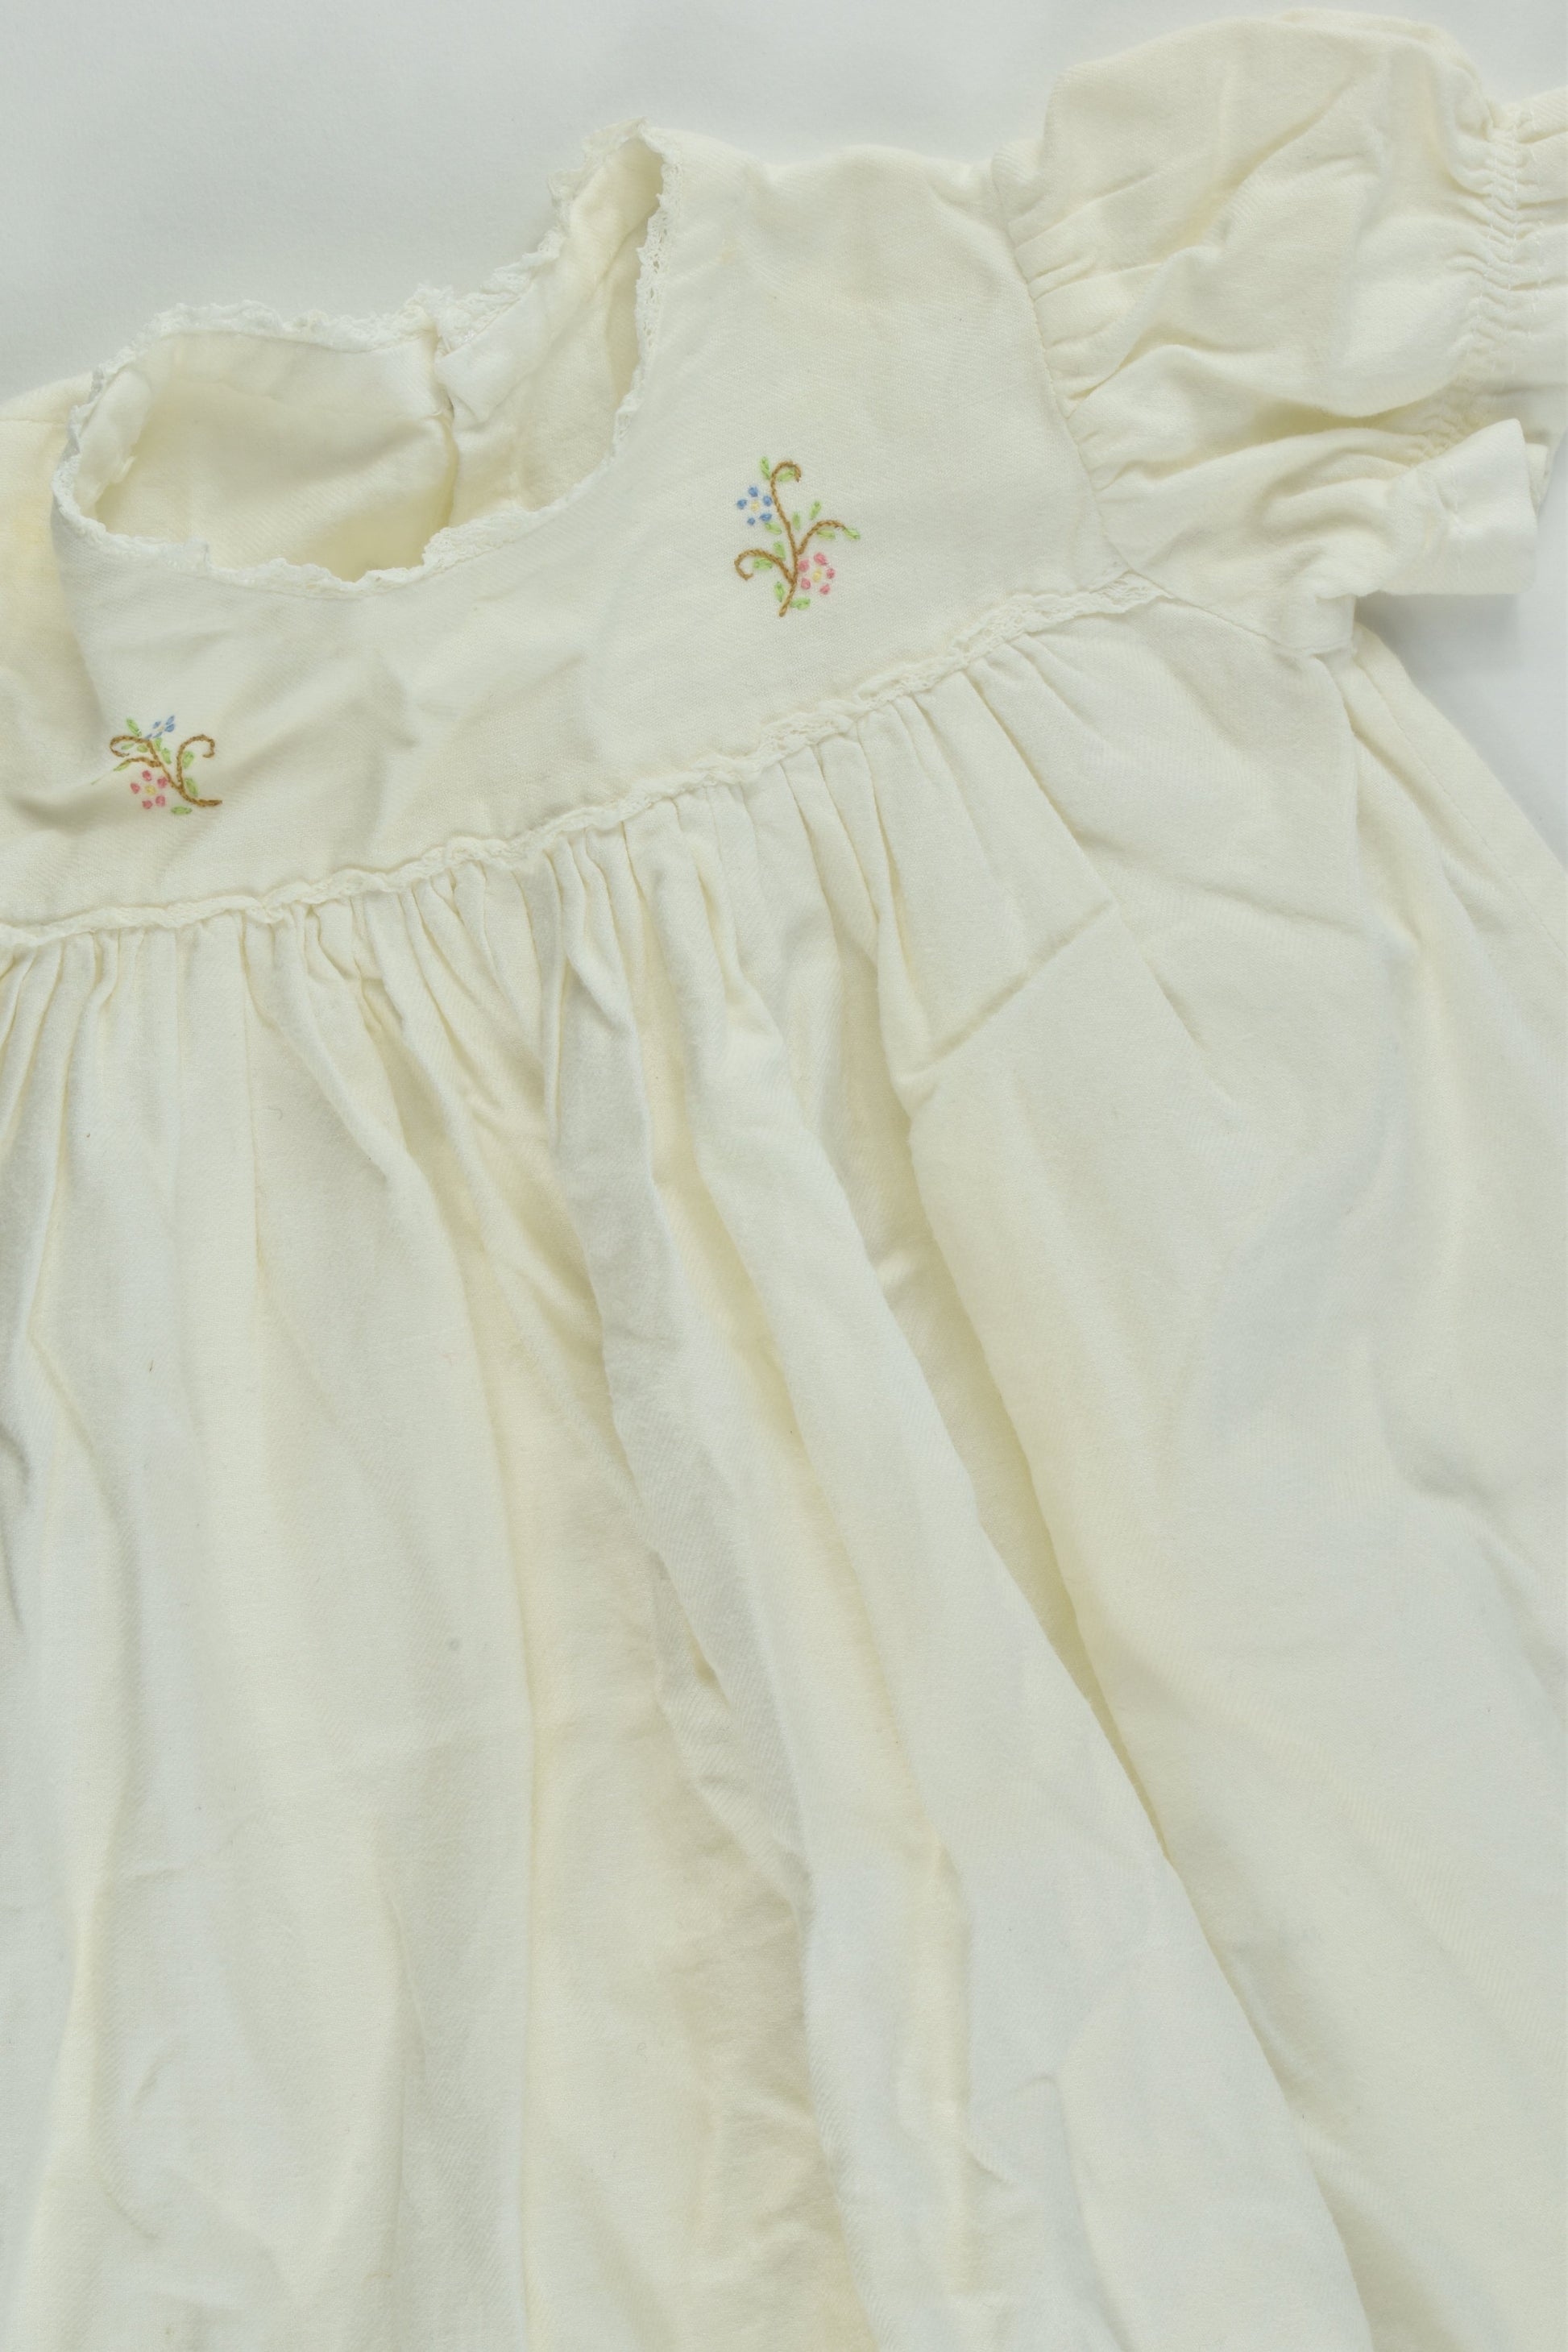 Handmade Size approx 00 Vintage Dress